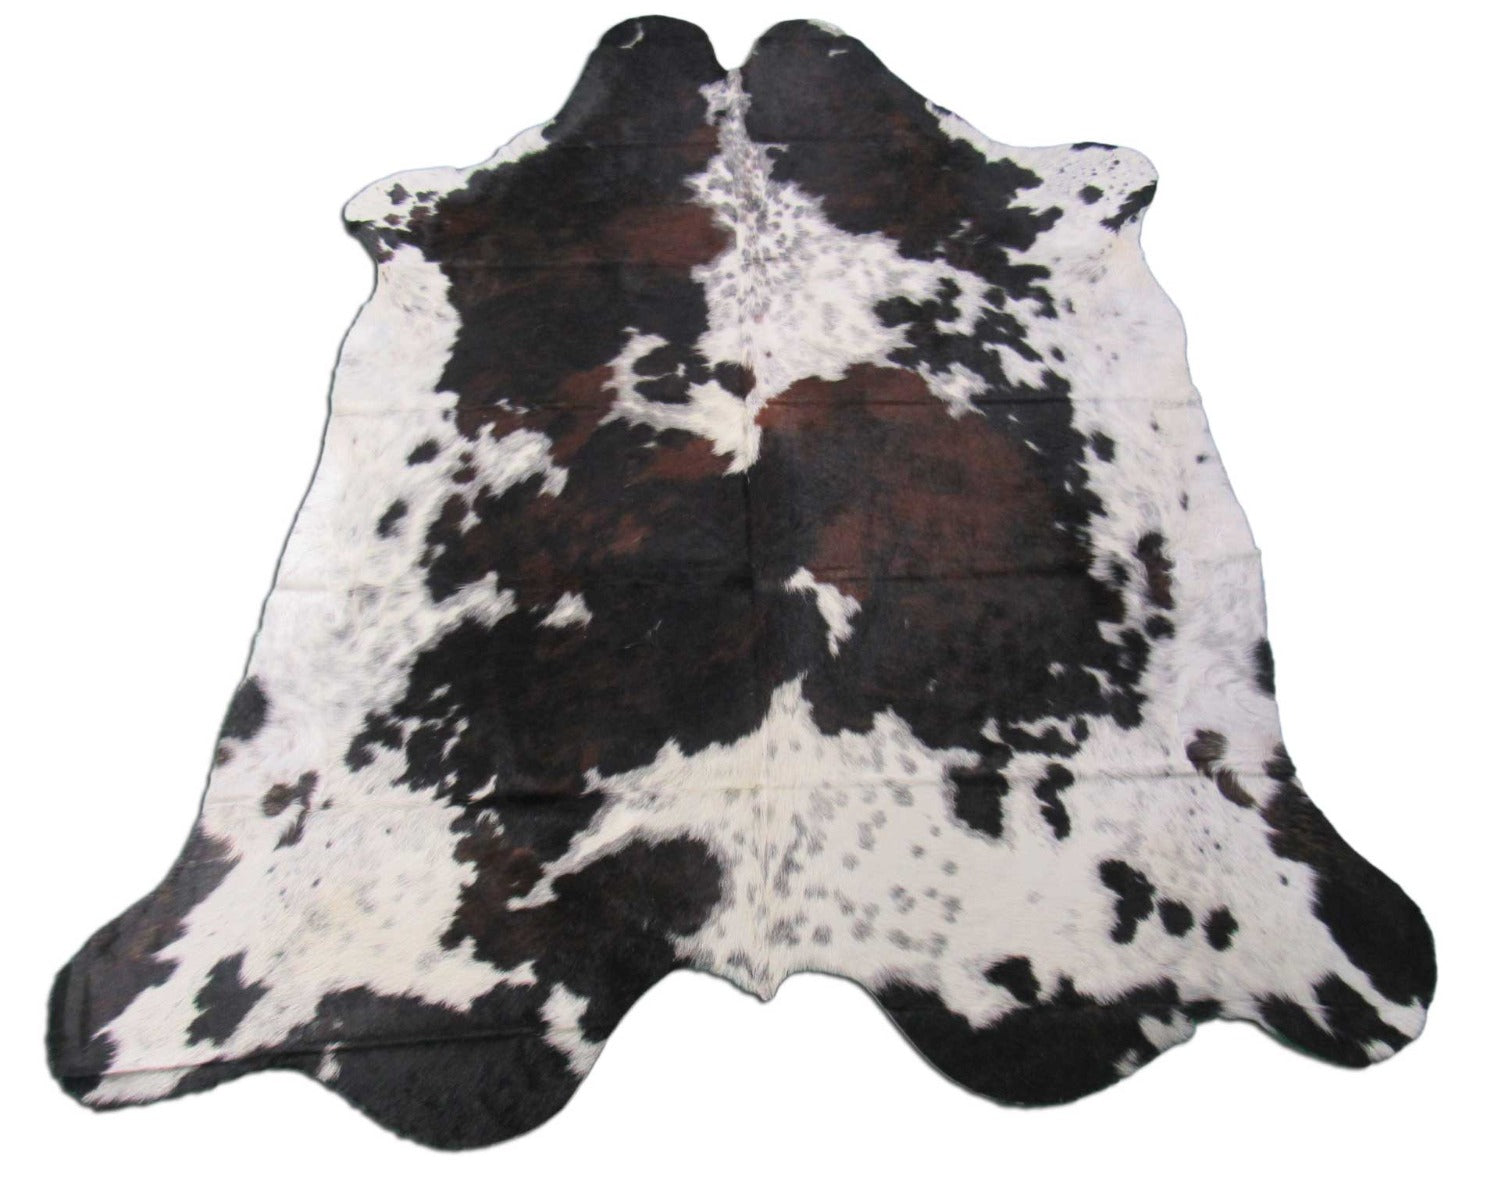 Tricolor Cowhide Rug Size: 7.5x6.2 feet M-1392